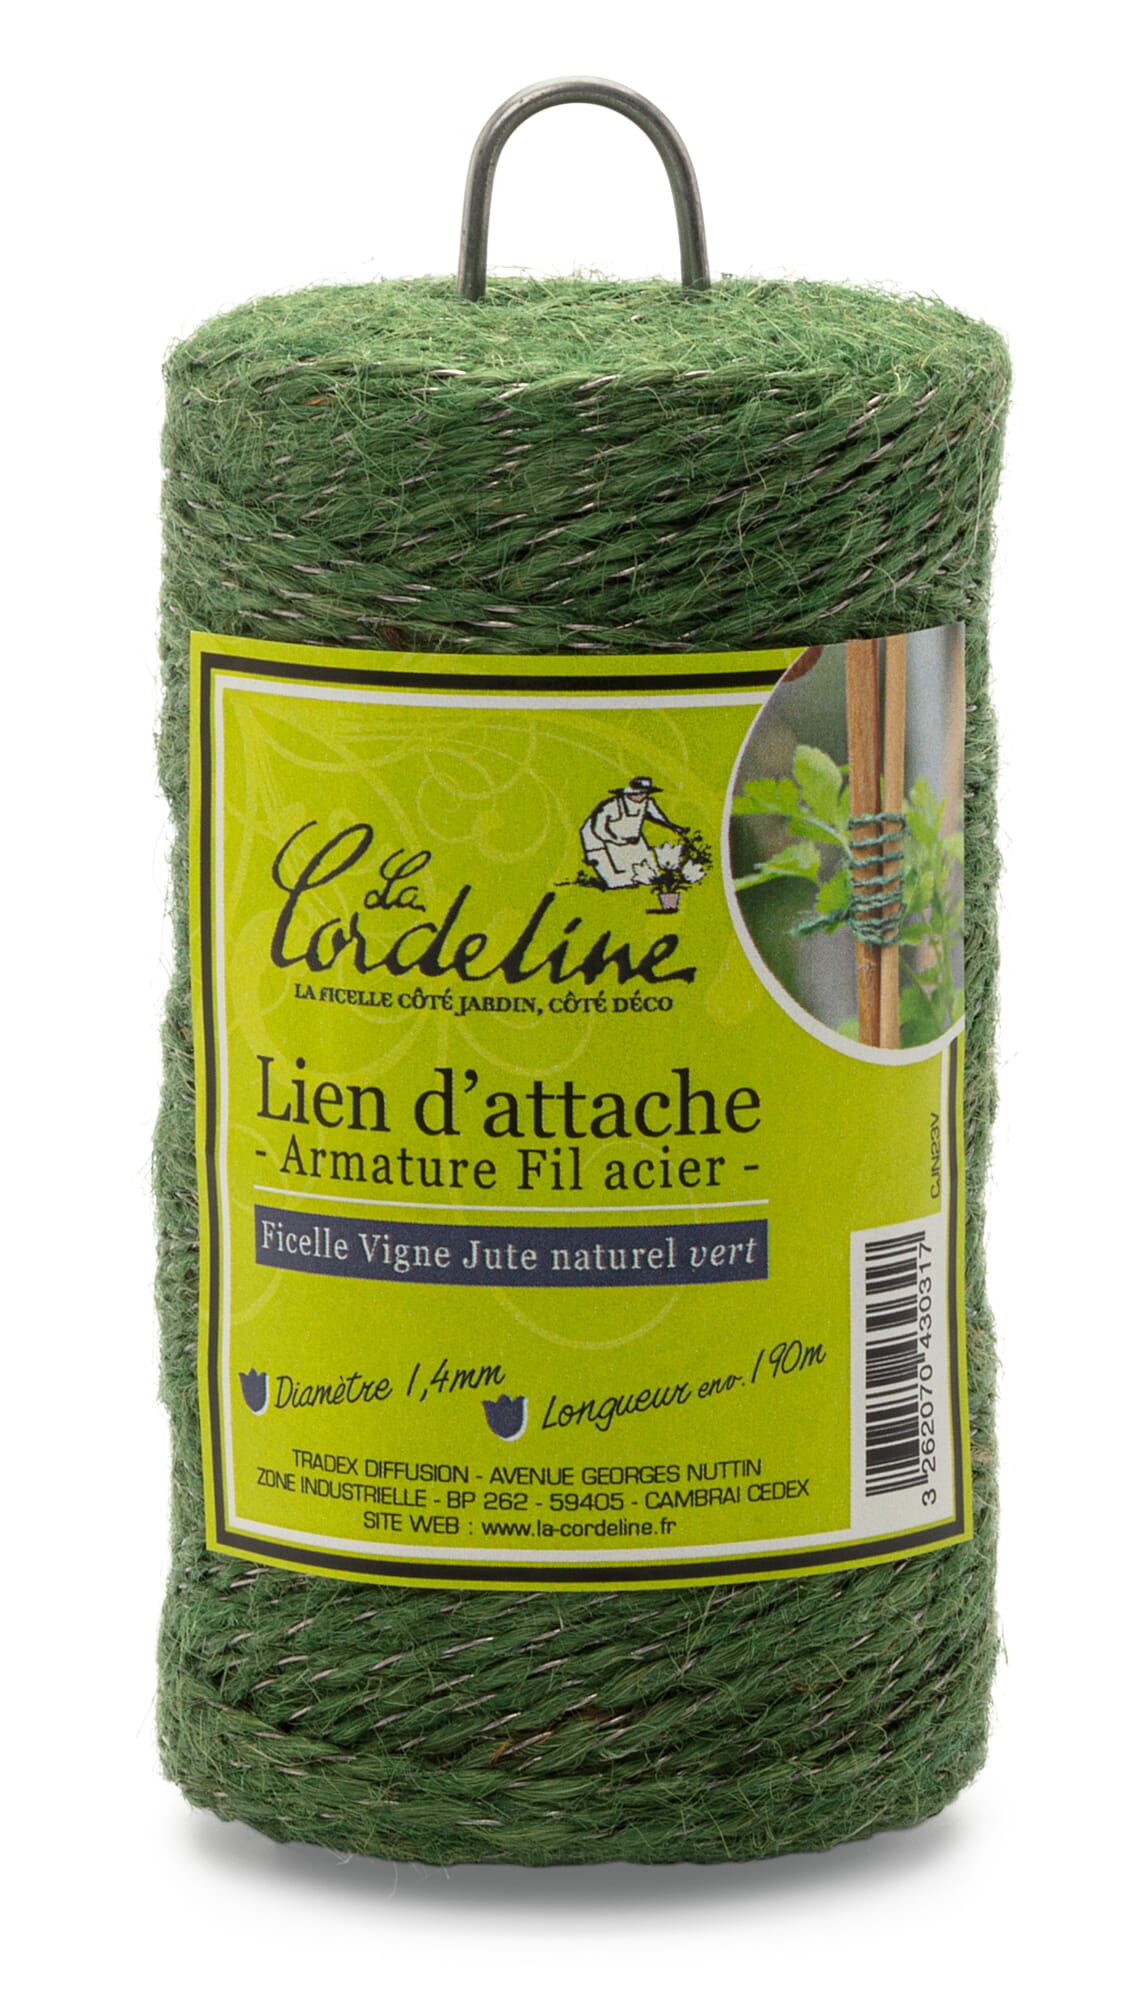 Garden yarn jute with wire inlay, Green